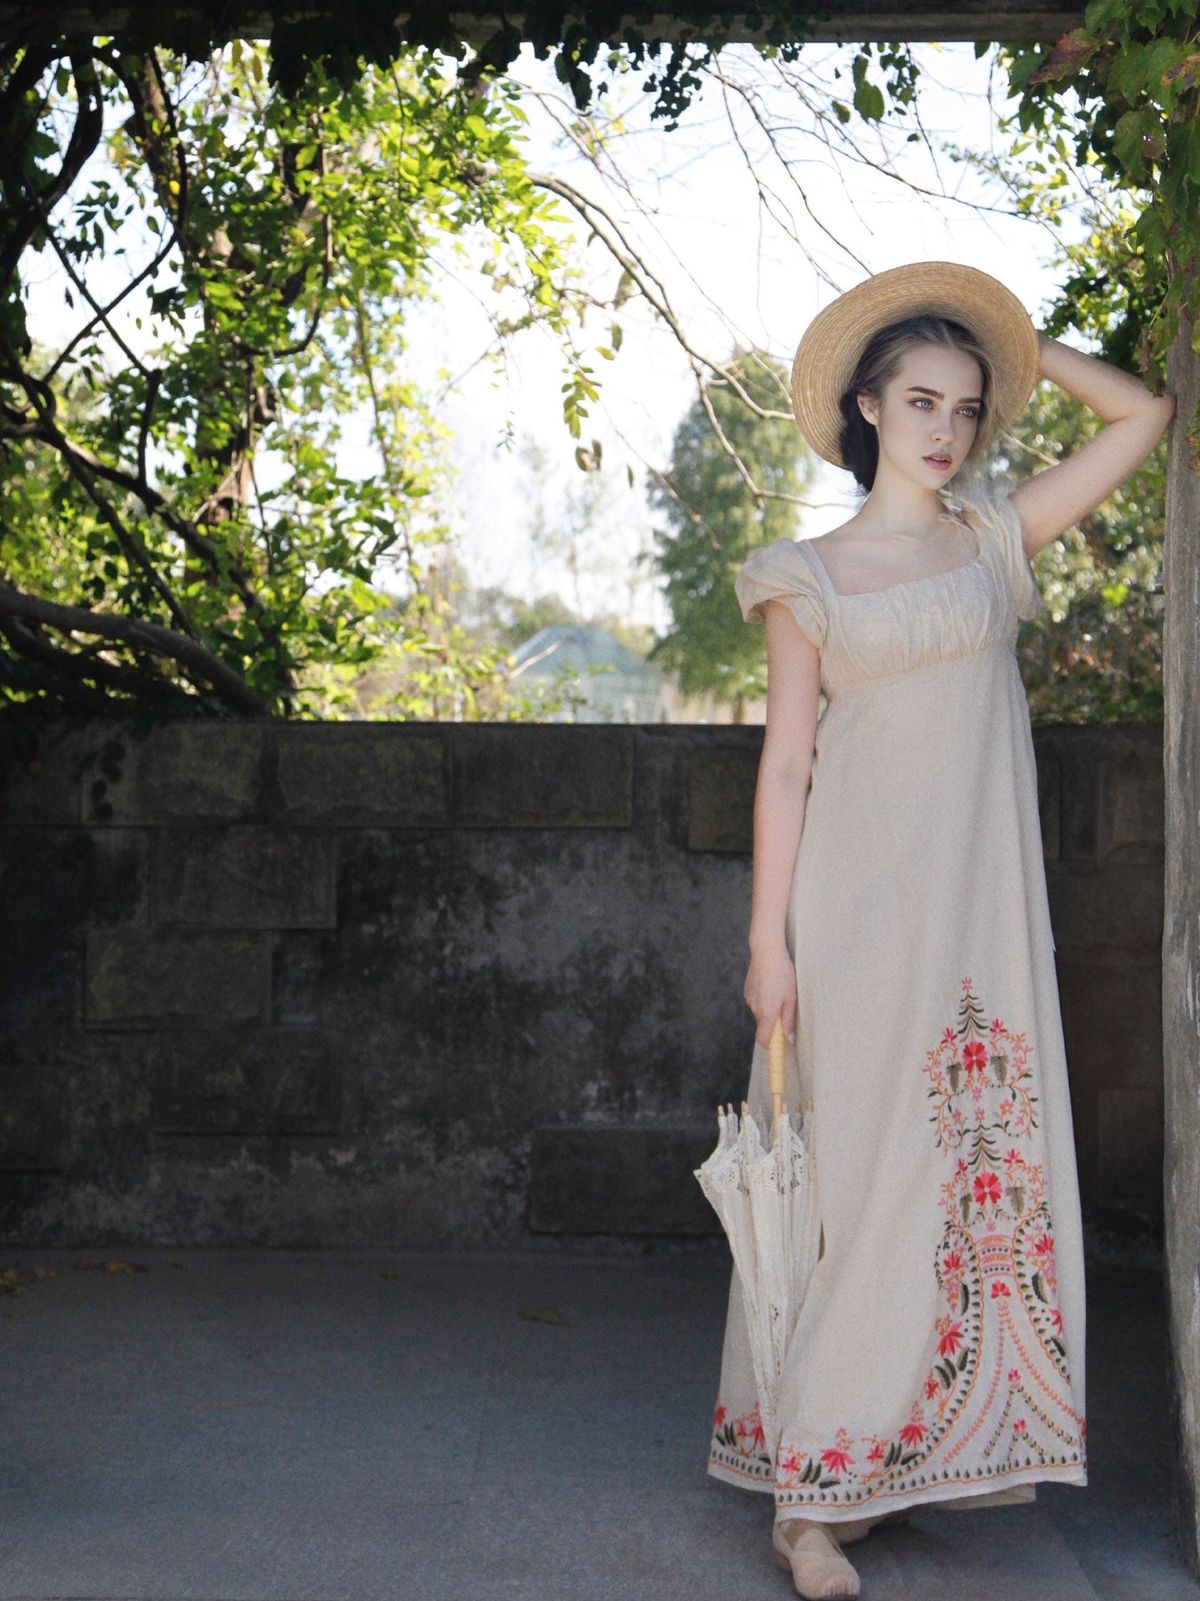 Lily Pulitzer eyelet breezy cotton dress - THRIFTWARES VINTAGE